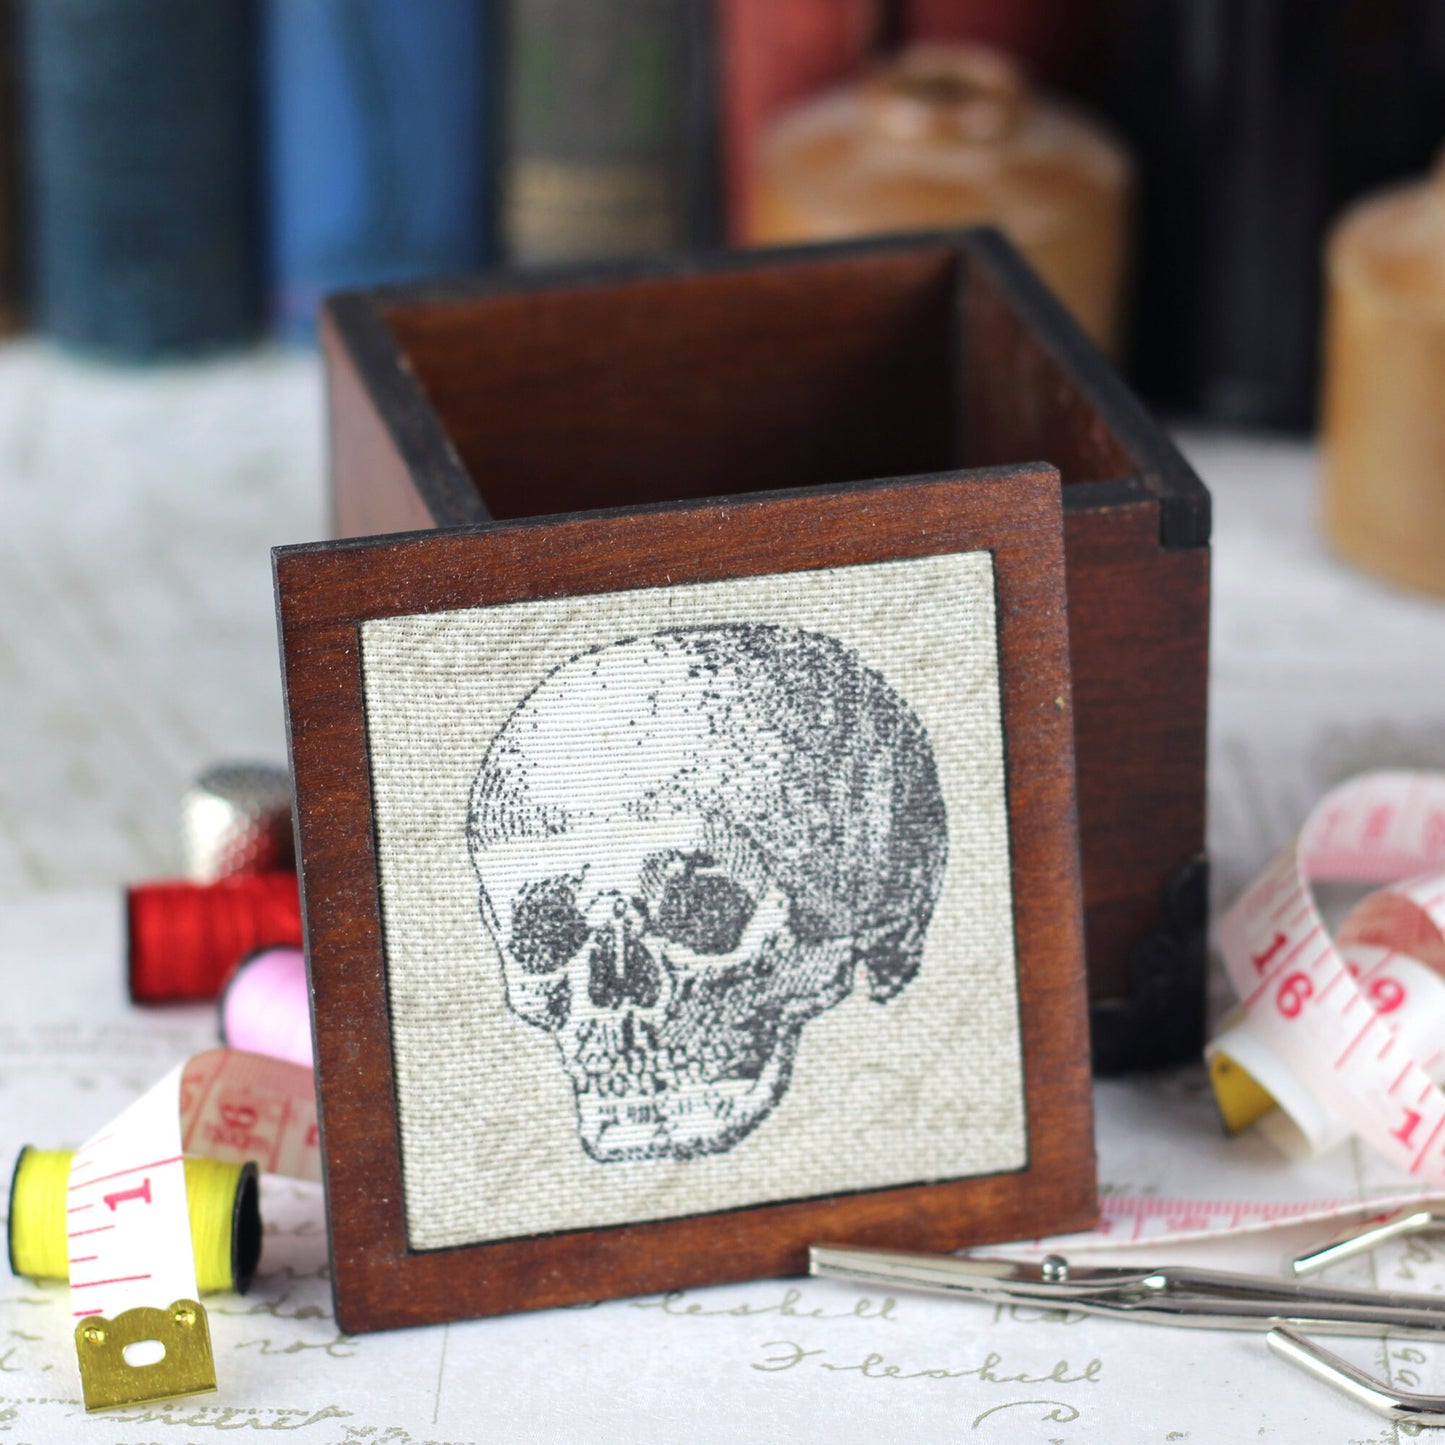 Skull Design Wooden Pin Cushion Sewing Box